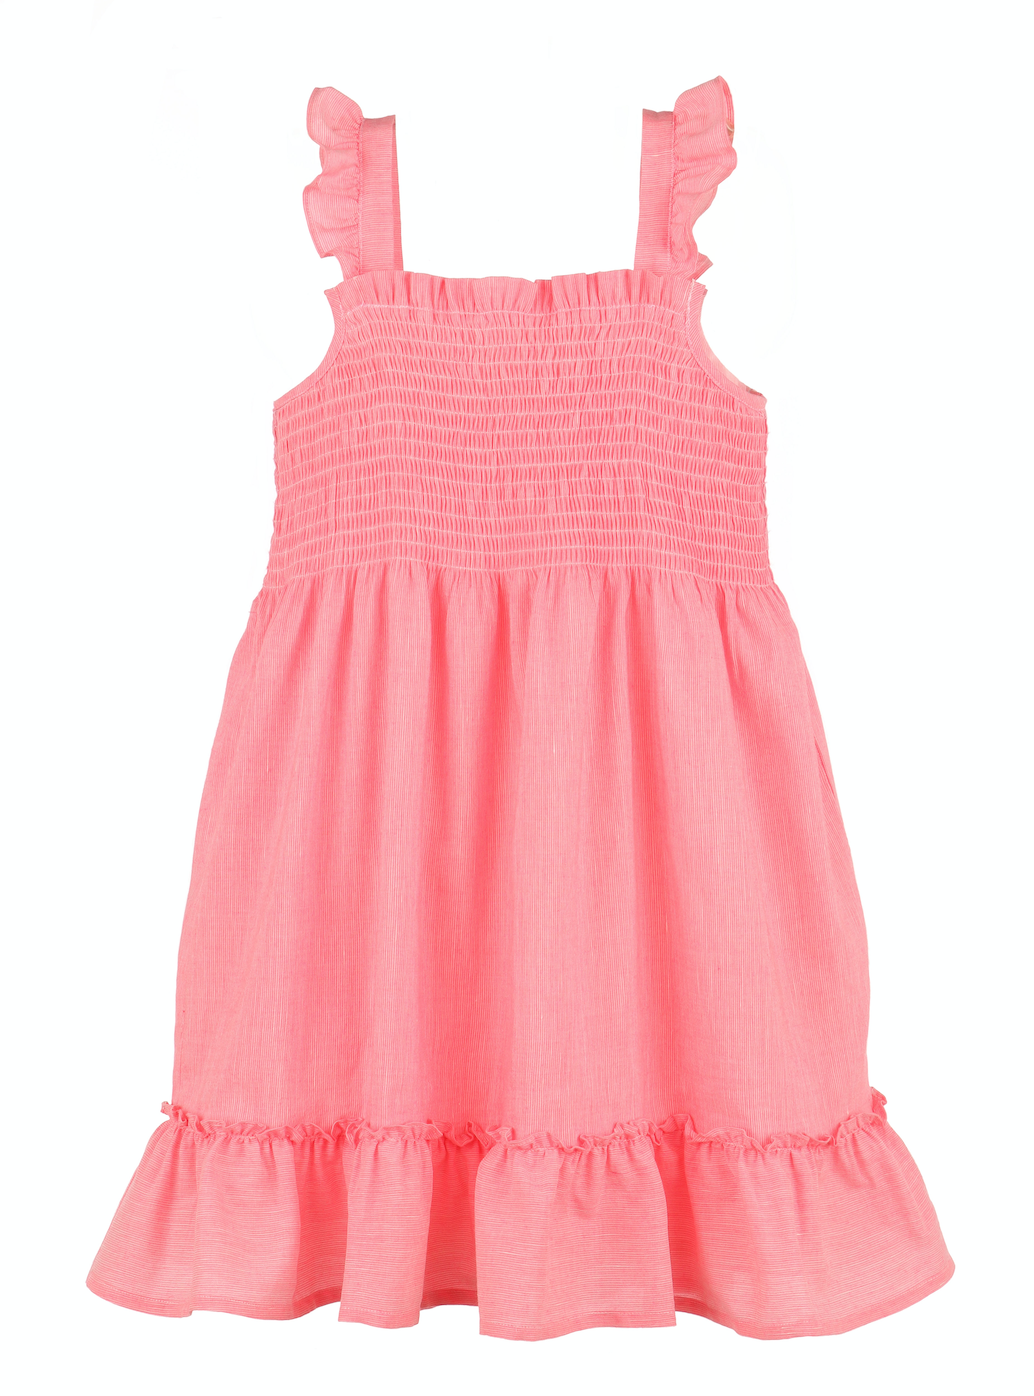 Kiara Pink Ruffle Dress